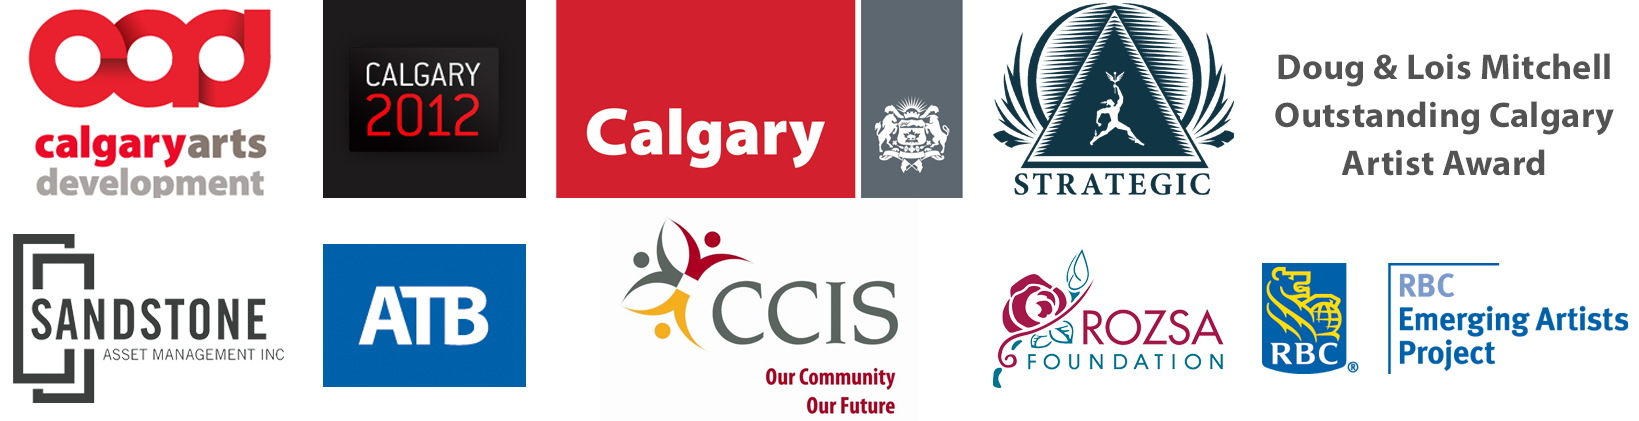 Logos – Calgary Arts Development, Calgary 2012, The City of Calgary, Strategic Group, Sandstone Asset Management Inc, ATB Financial, CCIS (Calgary Catholic Immigration Society), Rozsa Foundation, RBC Emerging Artist Award, 